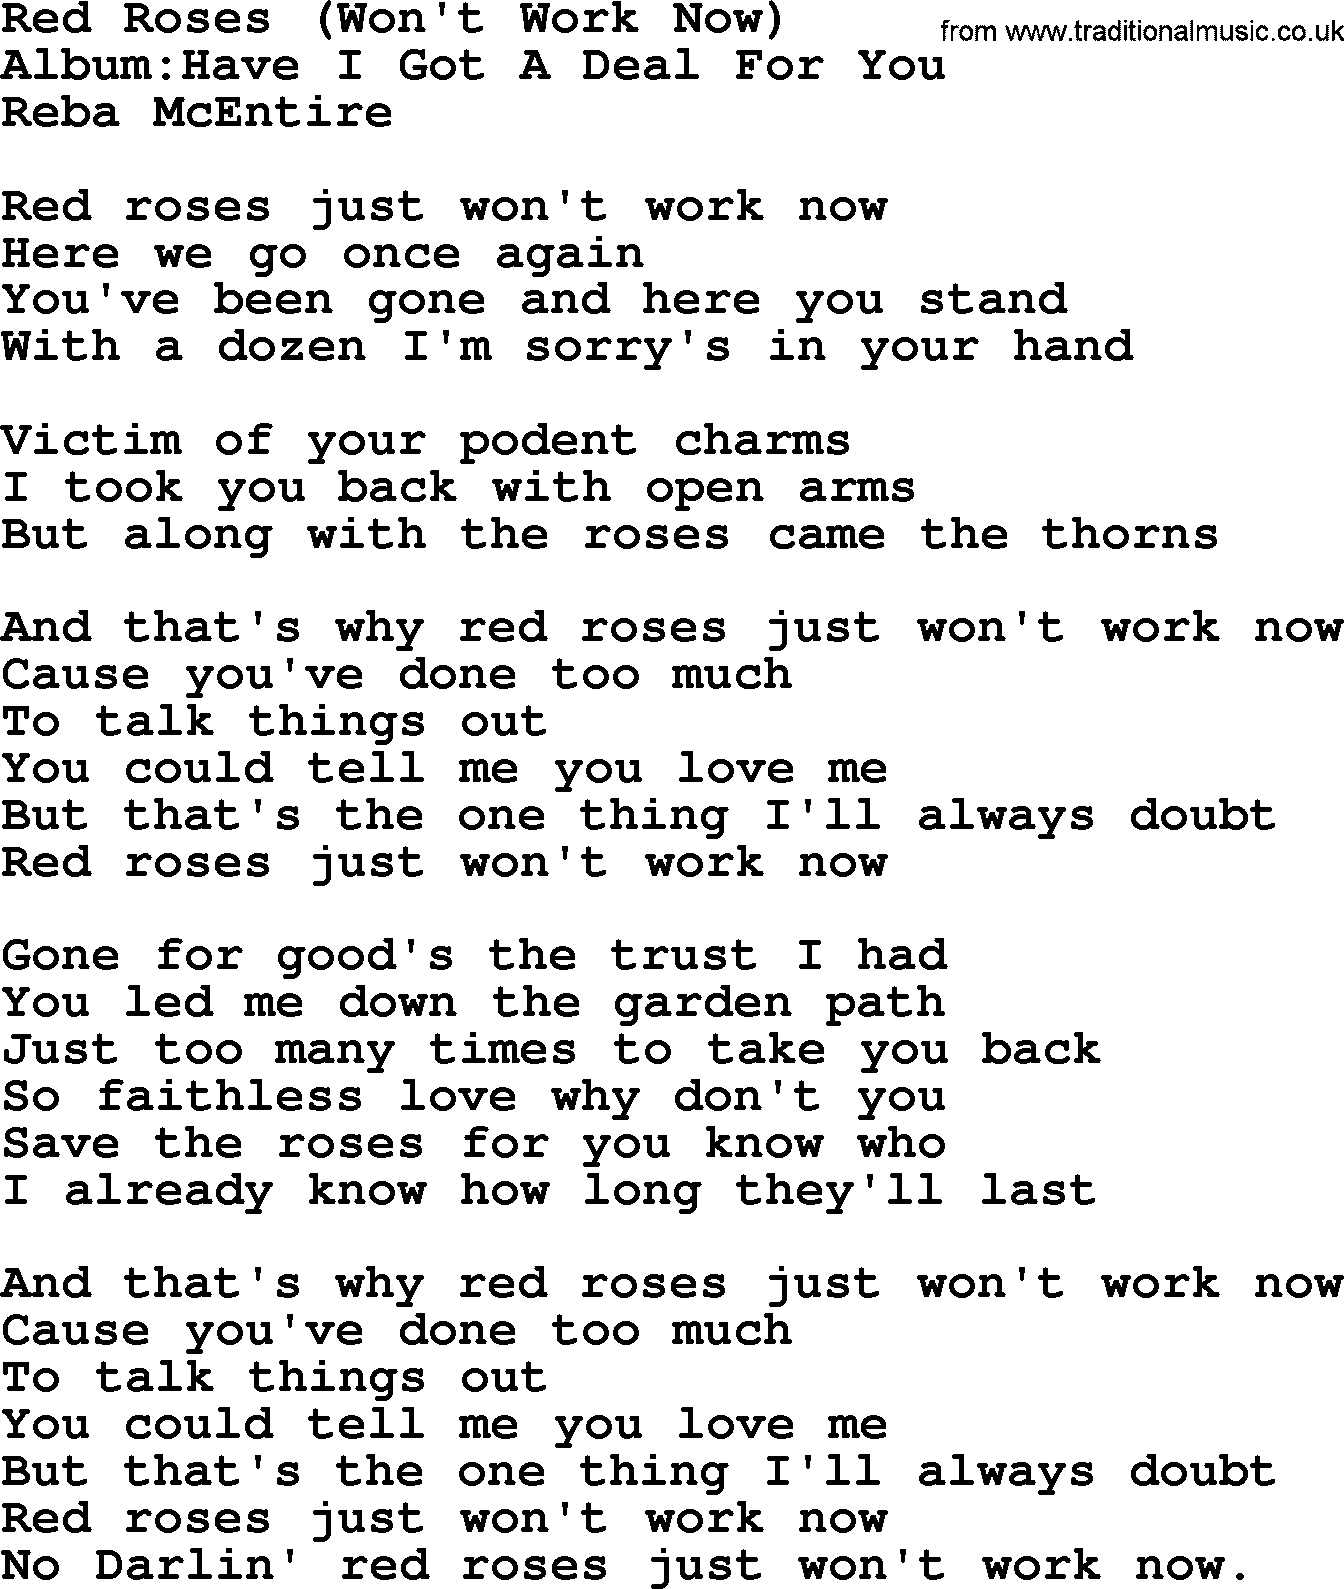 Reba McEntire song: Red Roses Won't Work Now lyrics